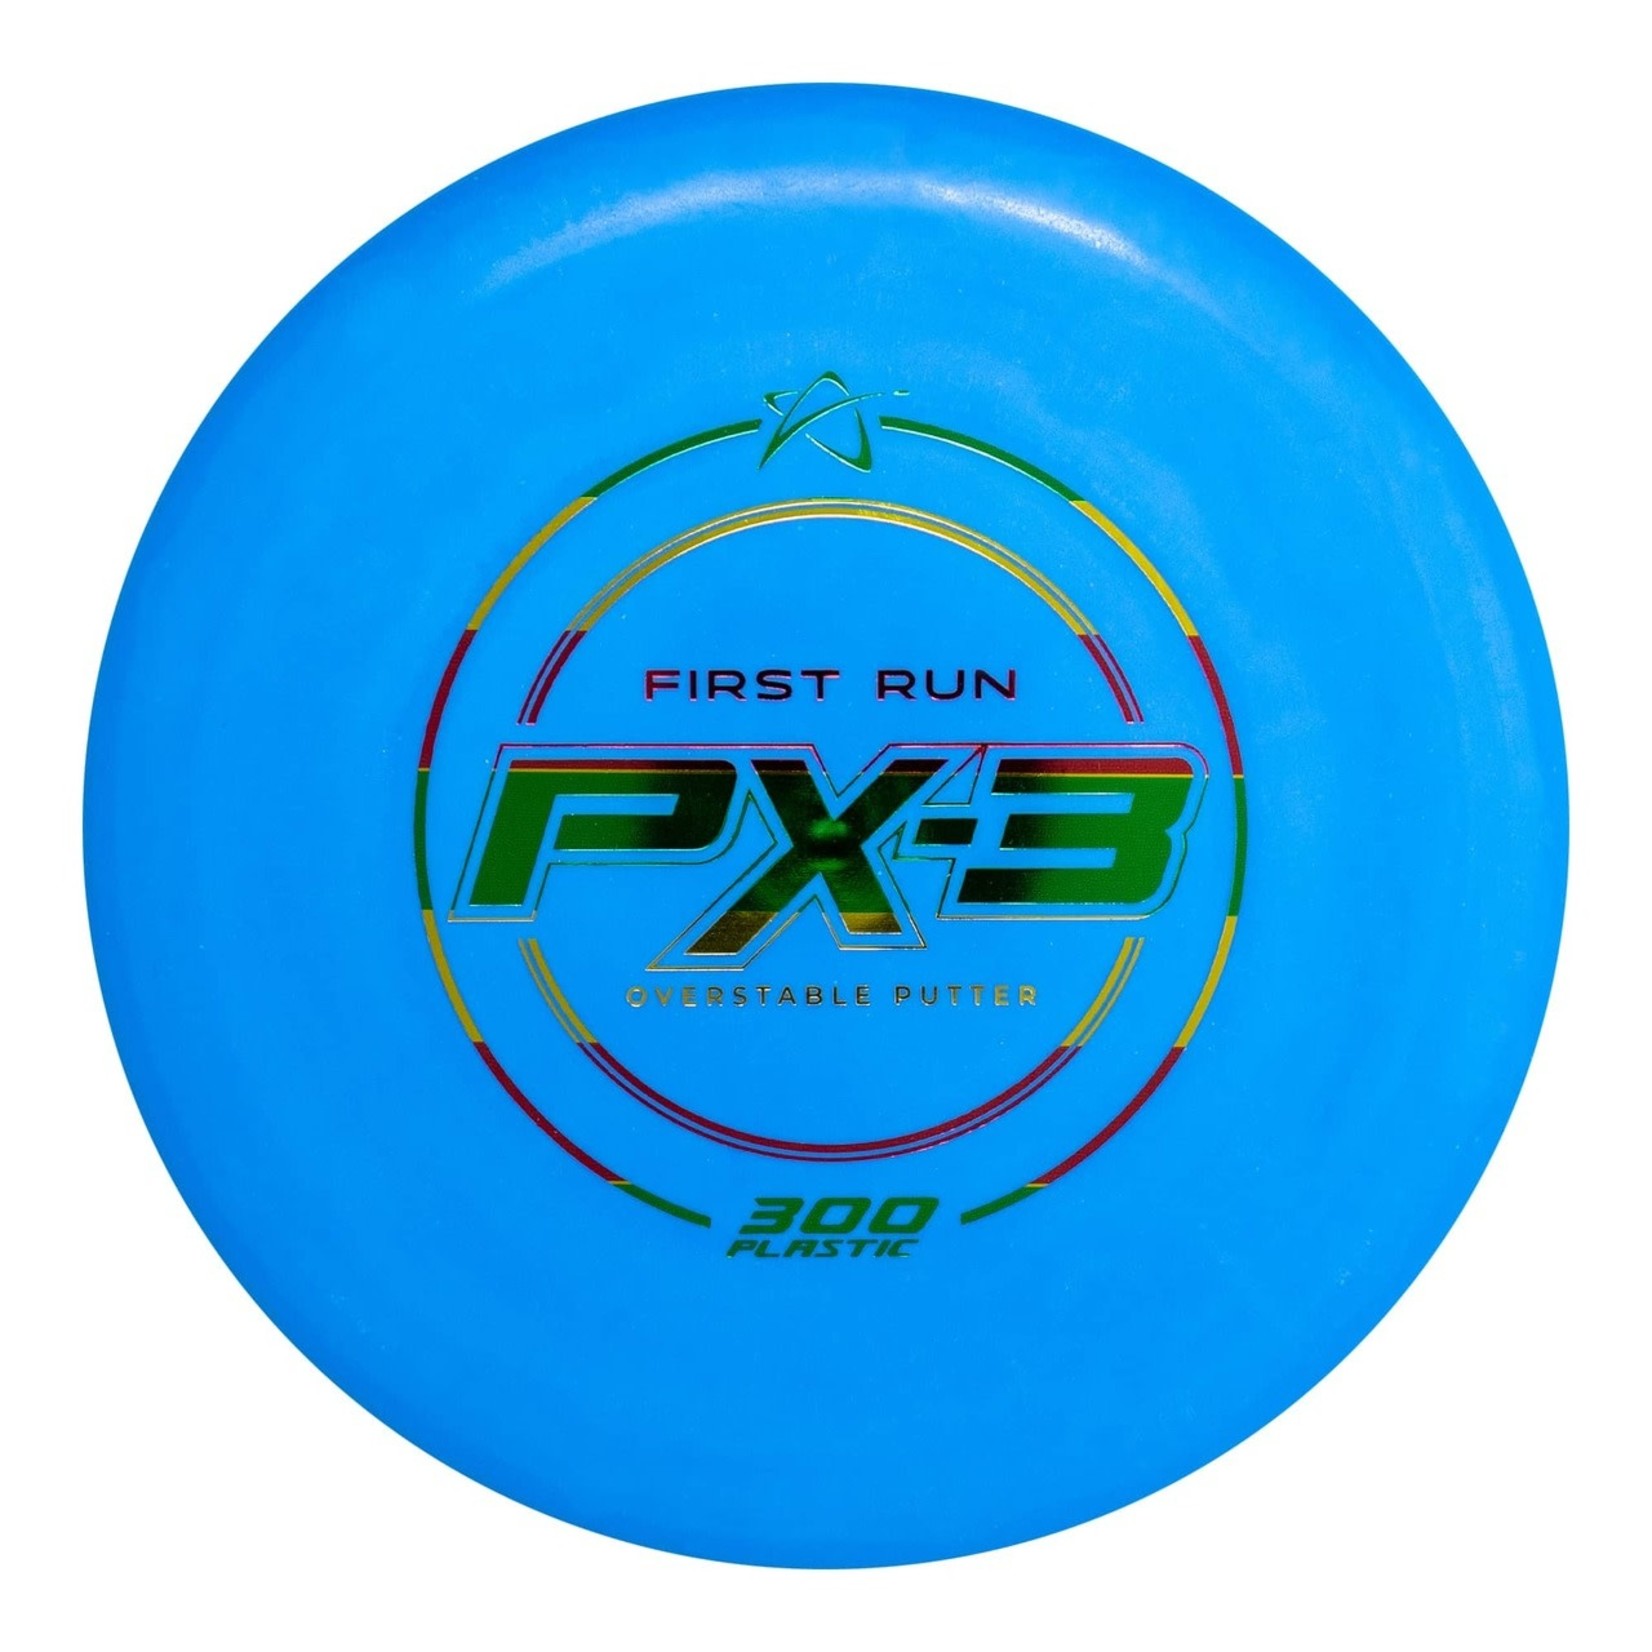 Prodigy Prodigy Disc, PX-3 Putter, First Run, PX-3-3-174